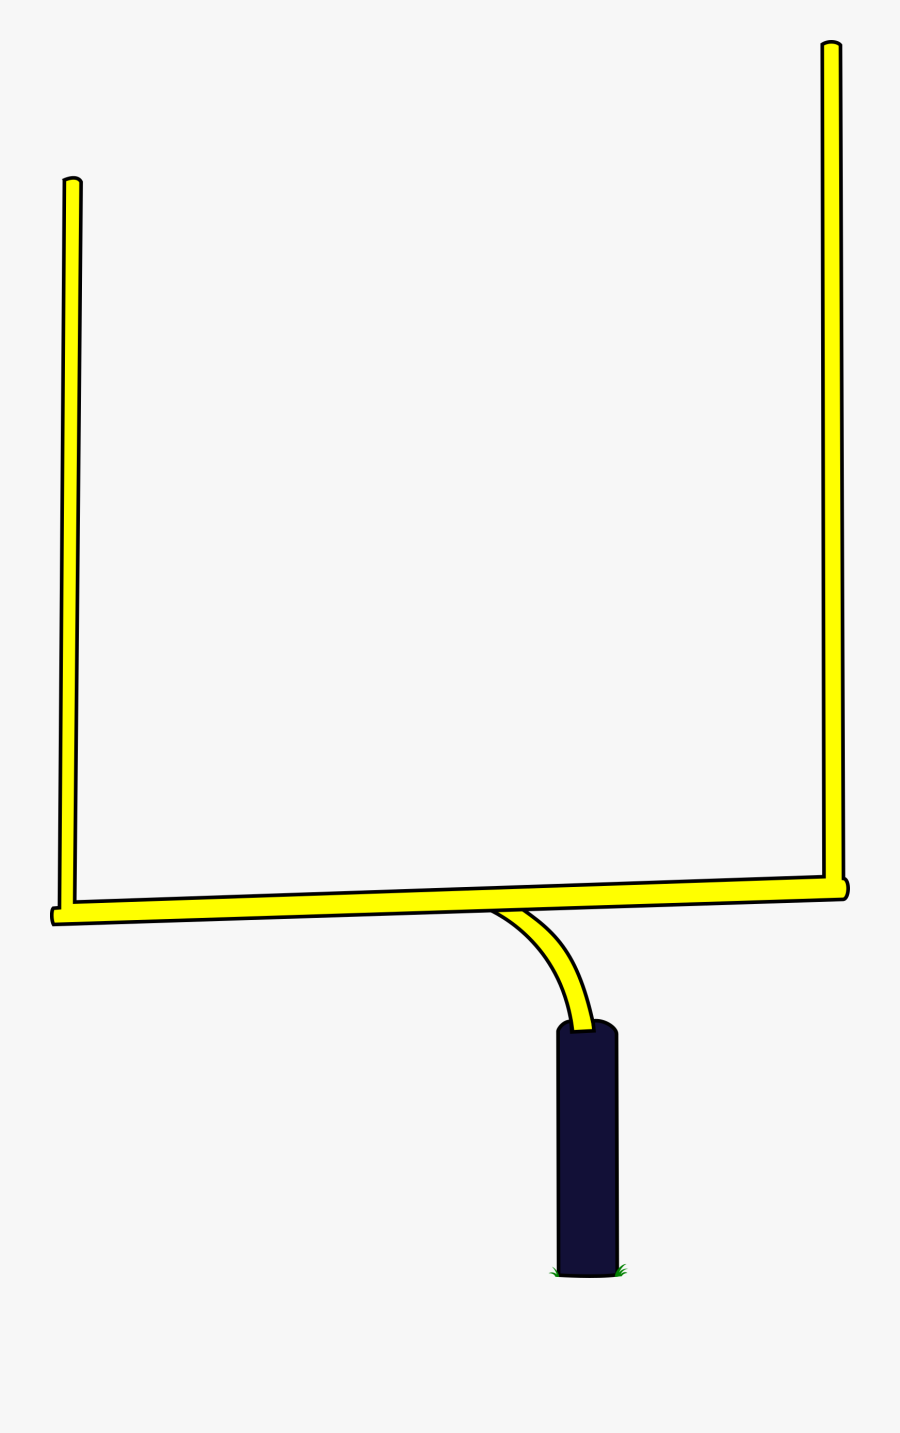 Clipart - Football Goal Posts Clipart, Transparent Clipart